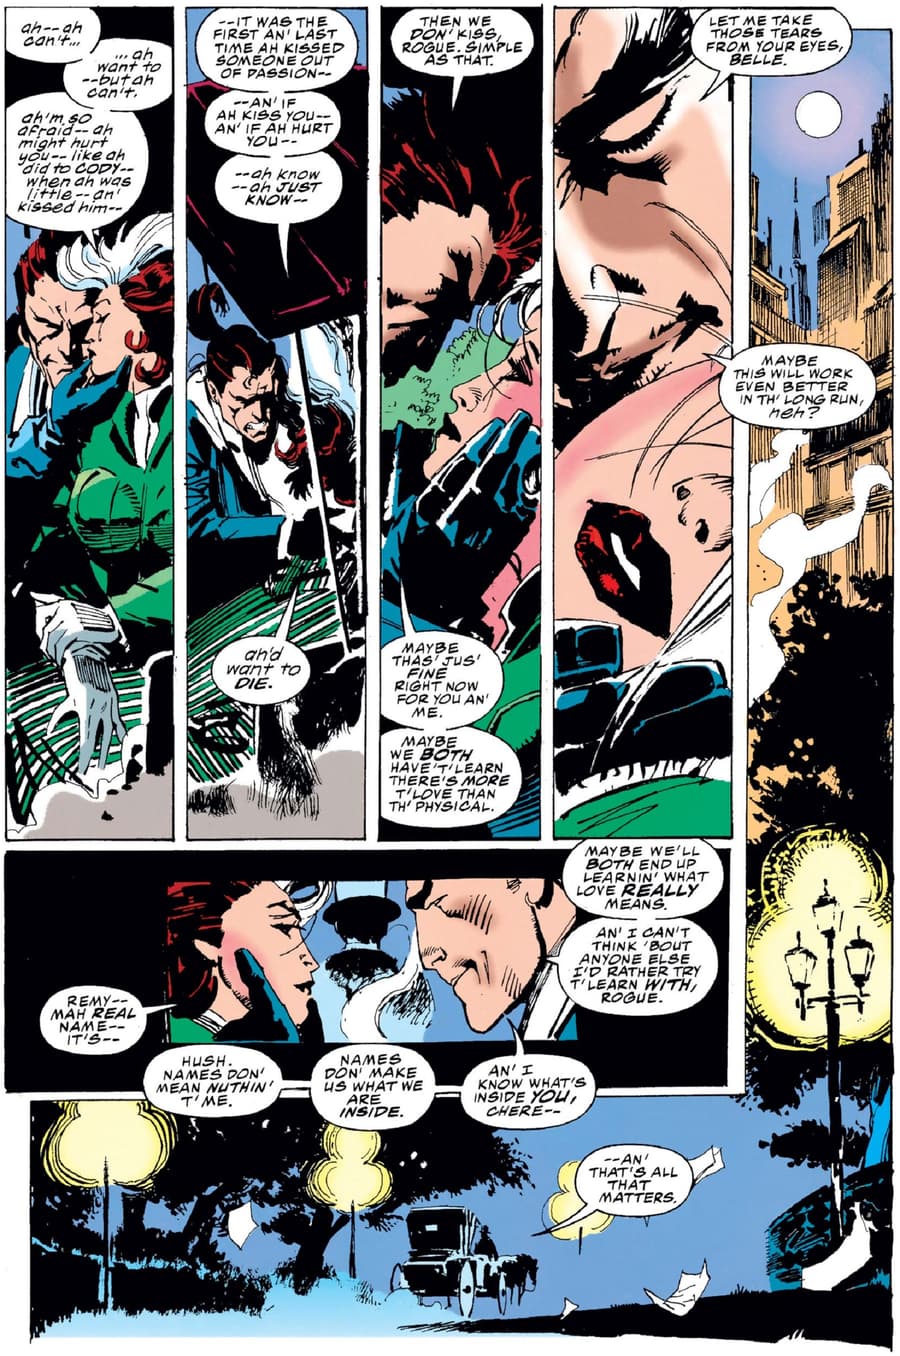 The first date in X-MEN (1991) #24.